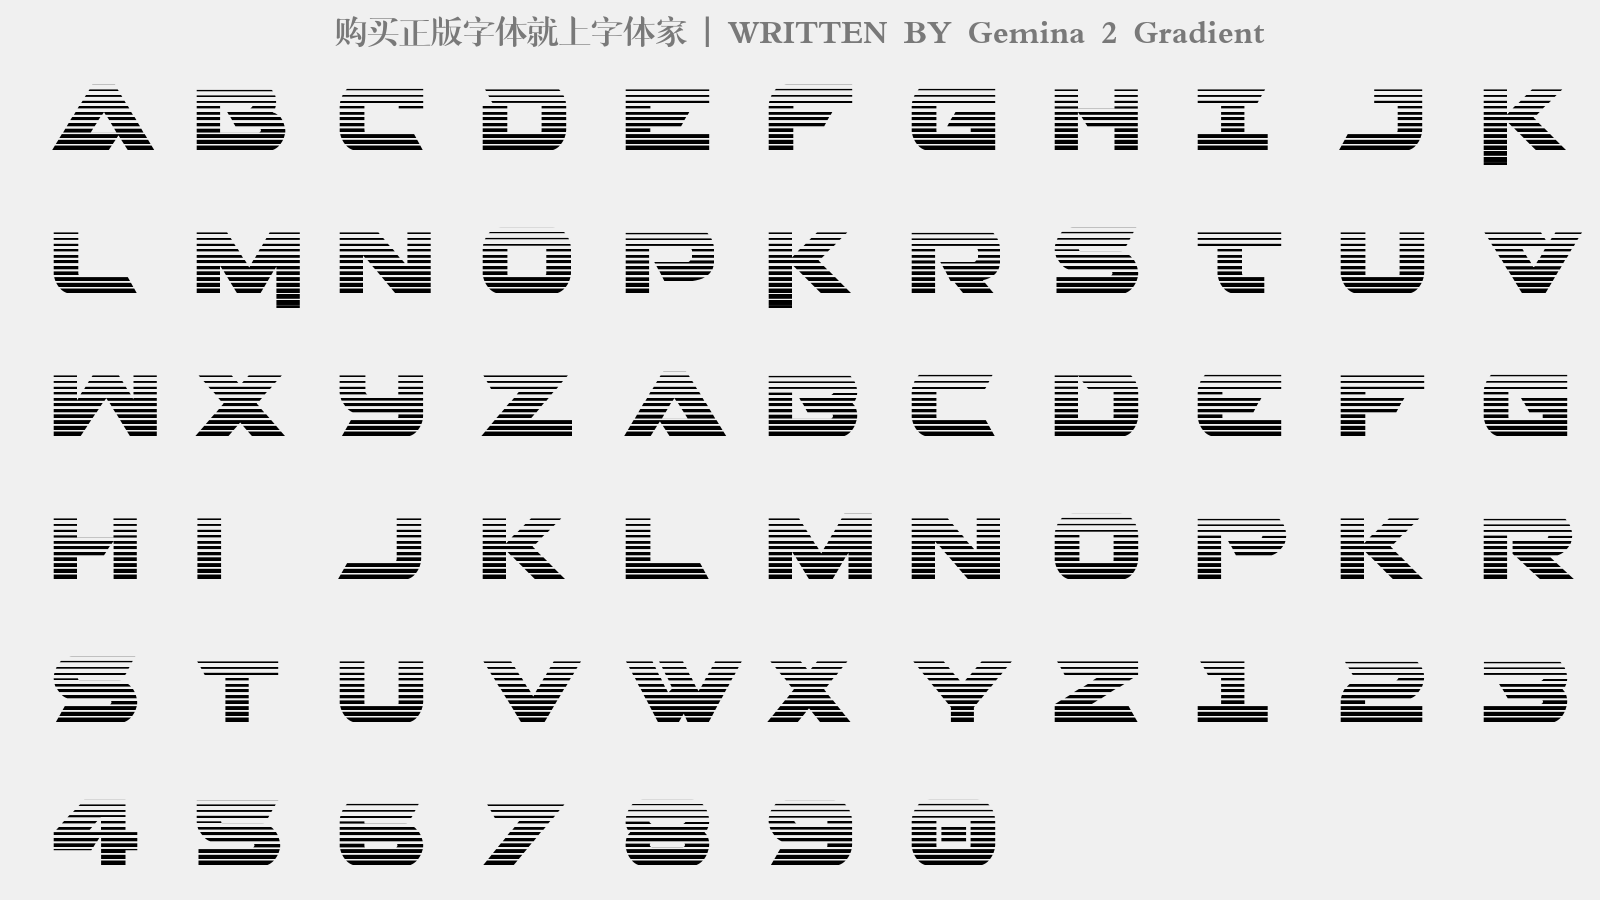 Gemina 2 Gradient - 大写字母/小写字母/数字